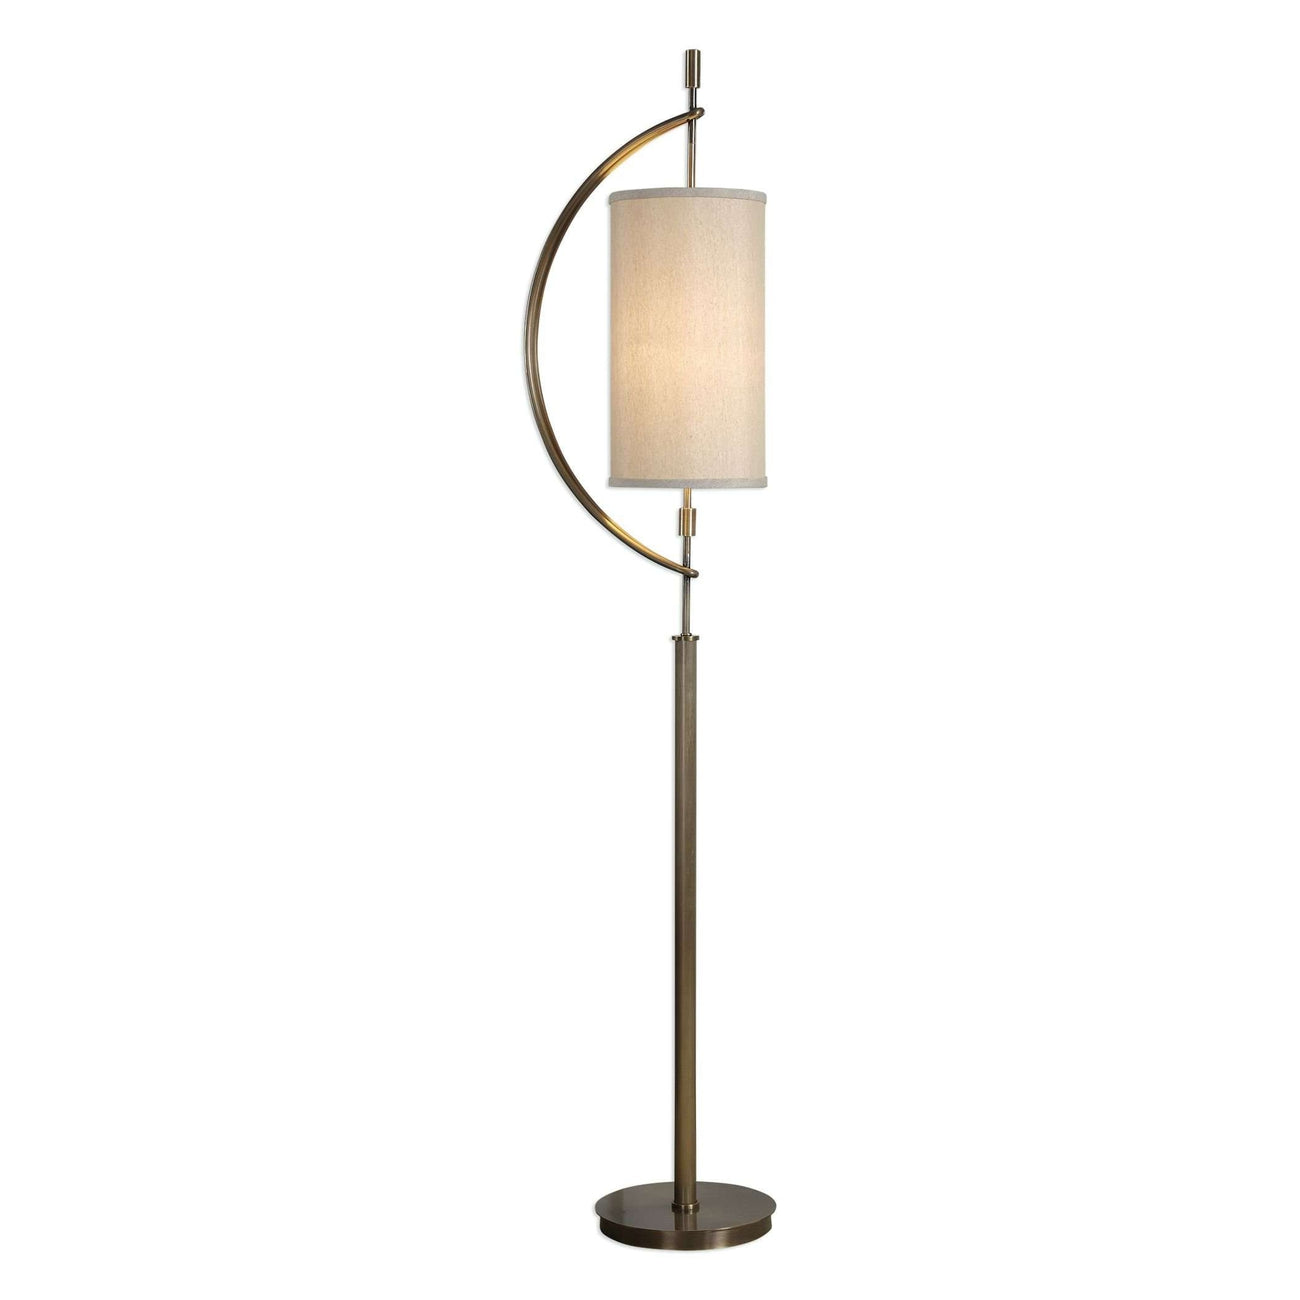 Balaour Antique Brass Floor Lamp-Uttermost-UTTM-28151-1-Floor Lamps-1-France and Son